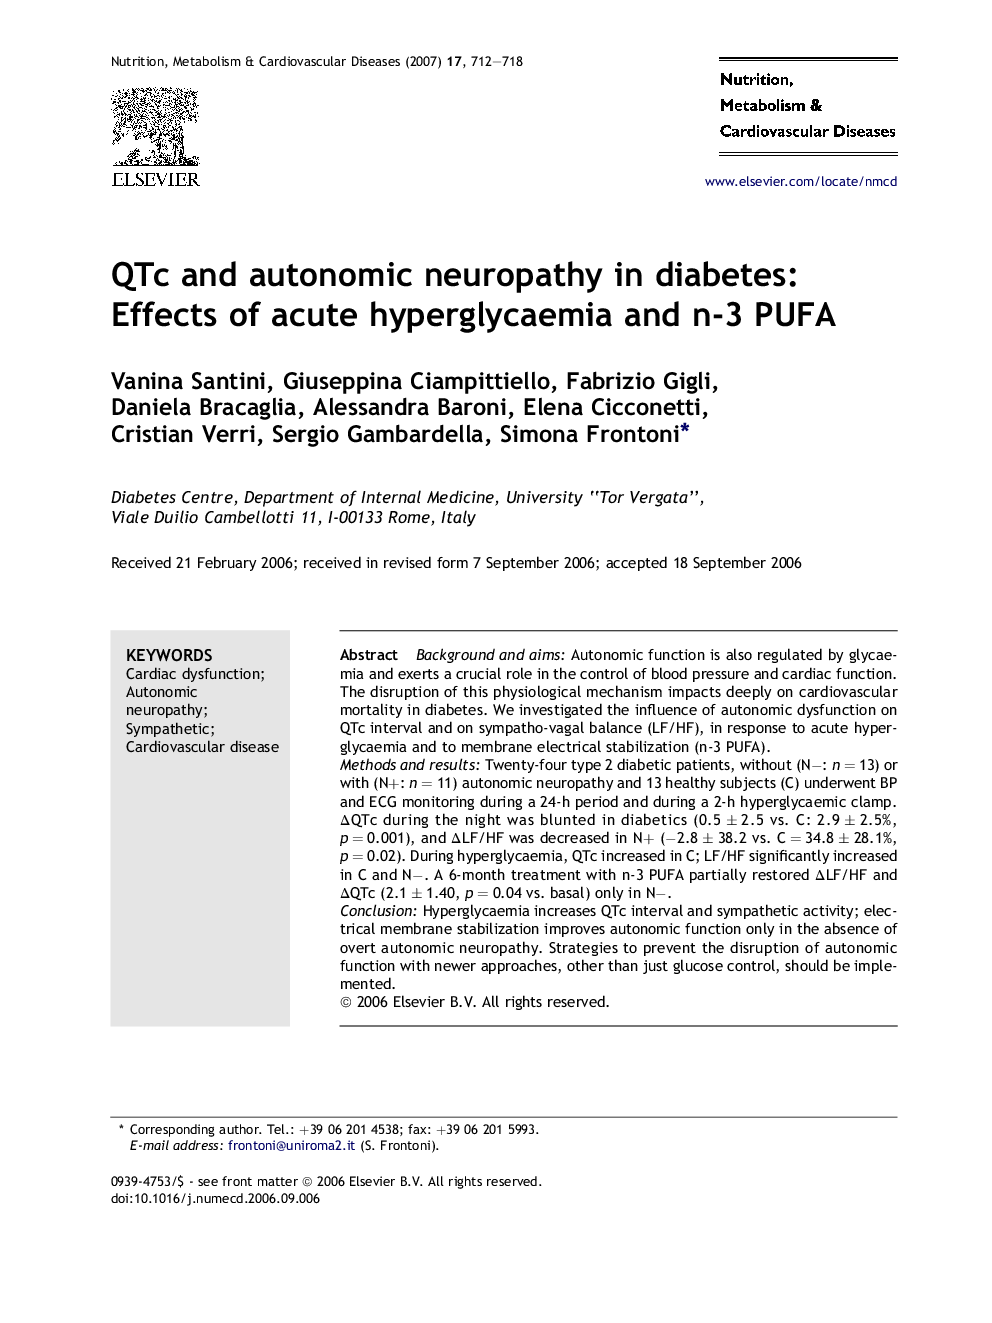 QTc and autonomic neuropathy in diabetes: Effects of acute hyperglycaemia and n-3 PUFA